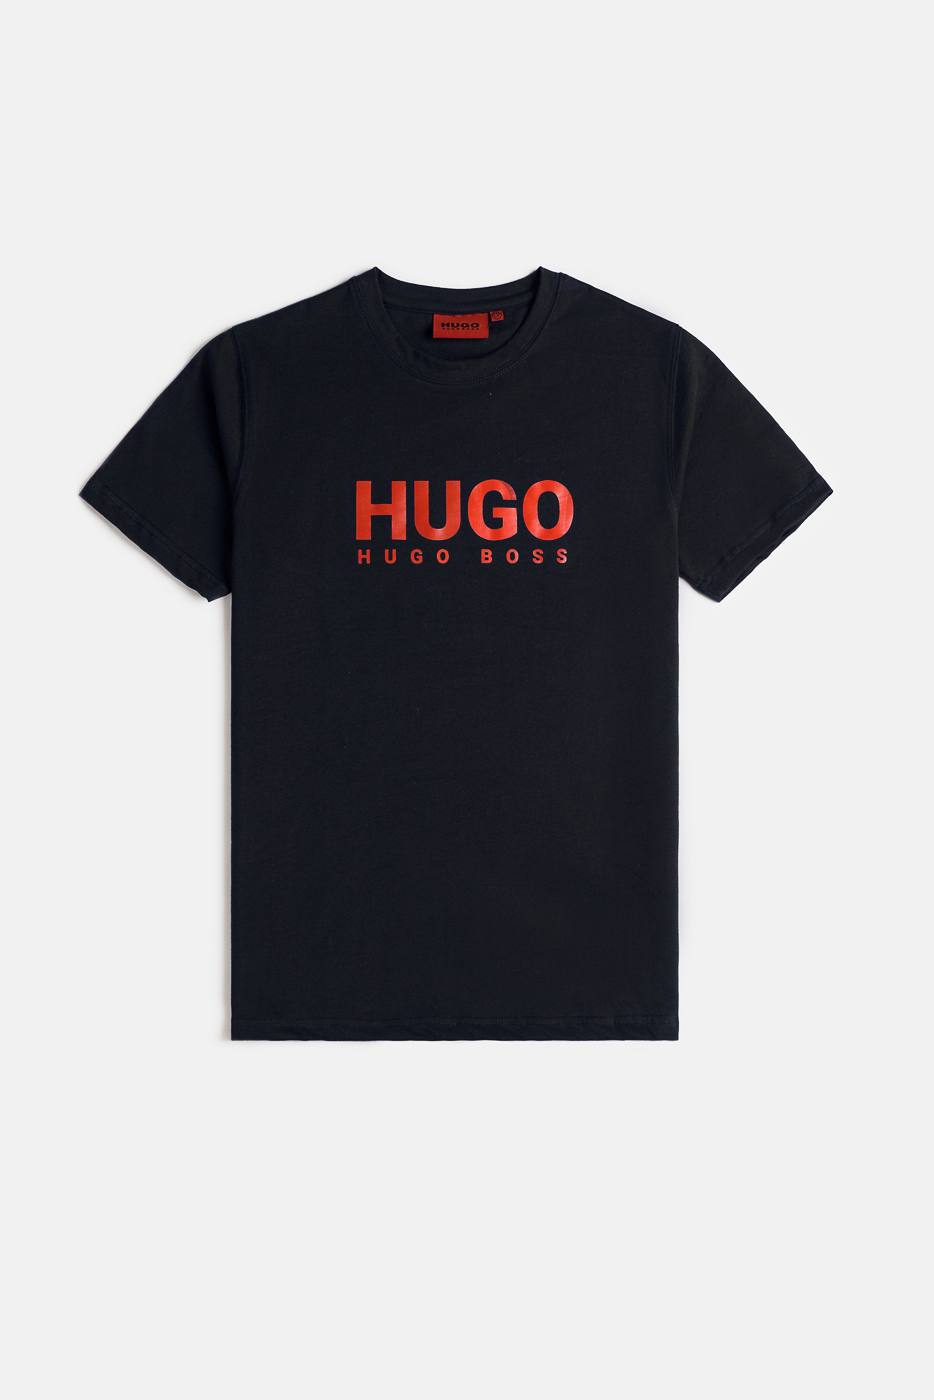 HB Imported Print T Shirt – Black